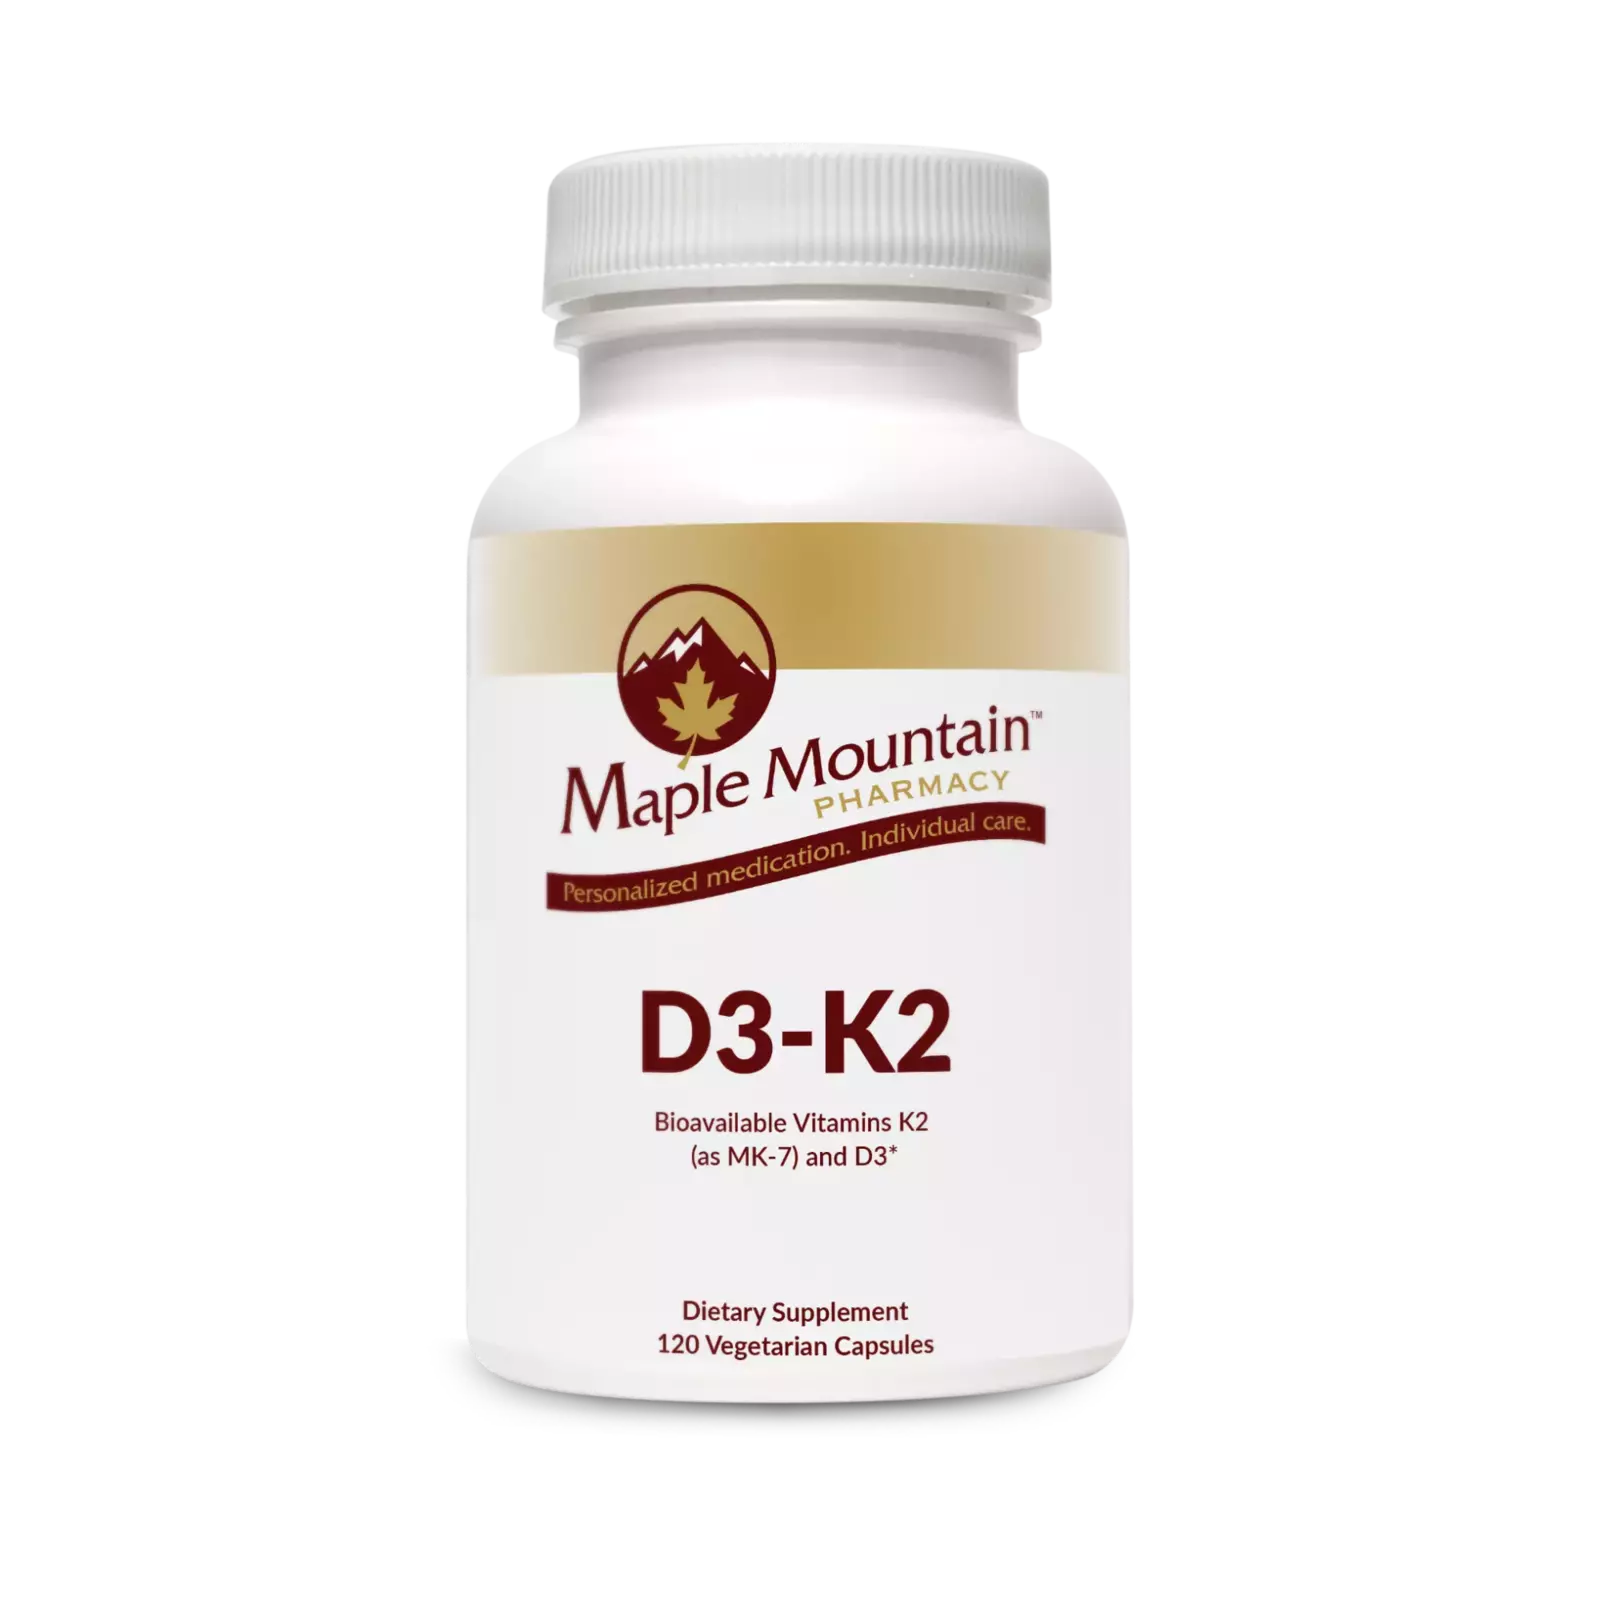 D3-K2